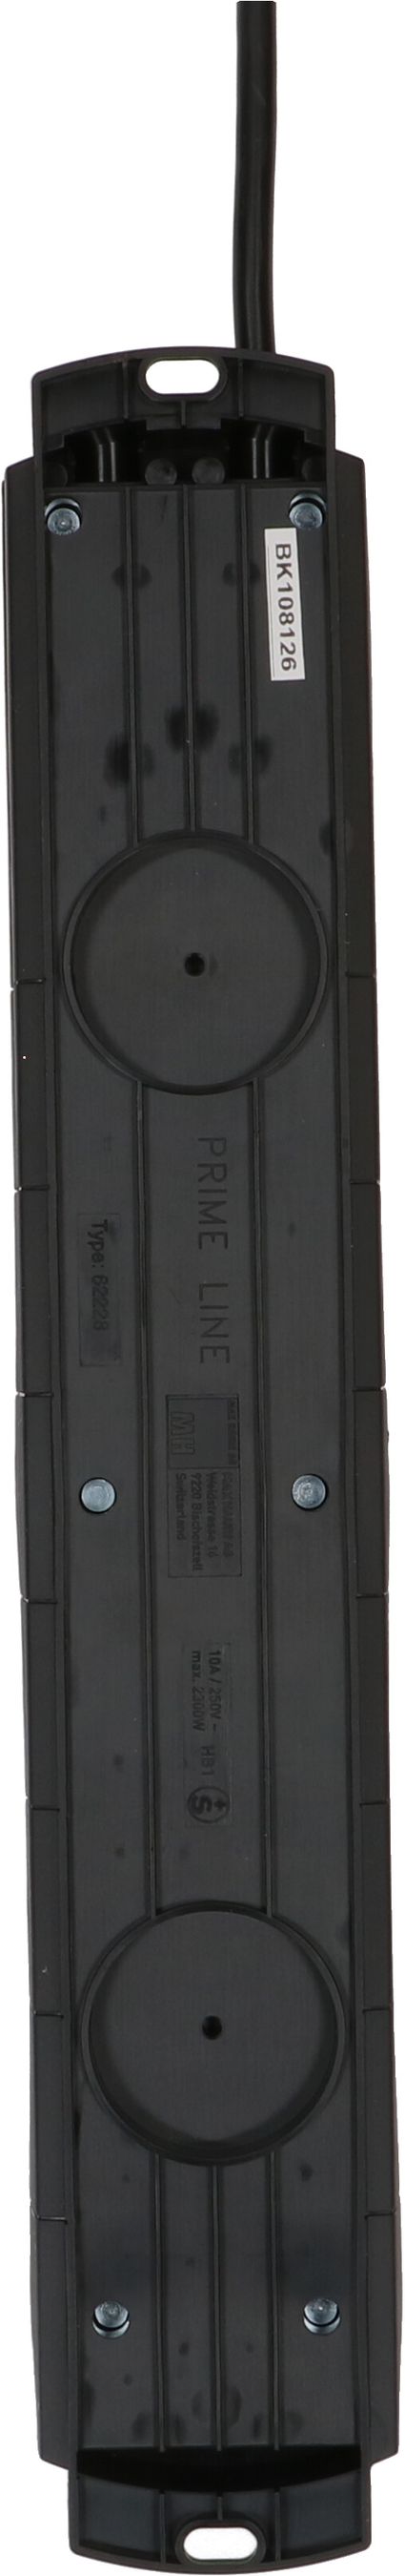 Steckdosenleiste Prime Line 8x Typ 13 schwarz